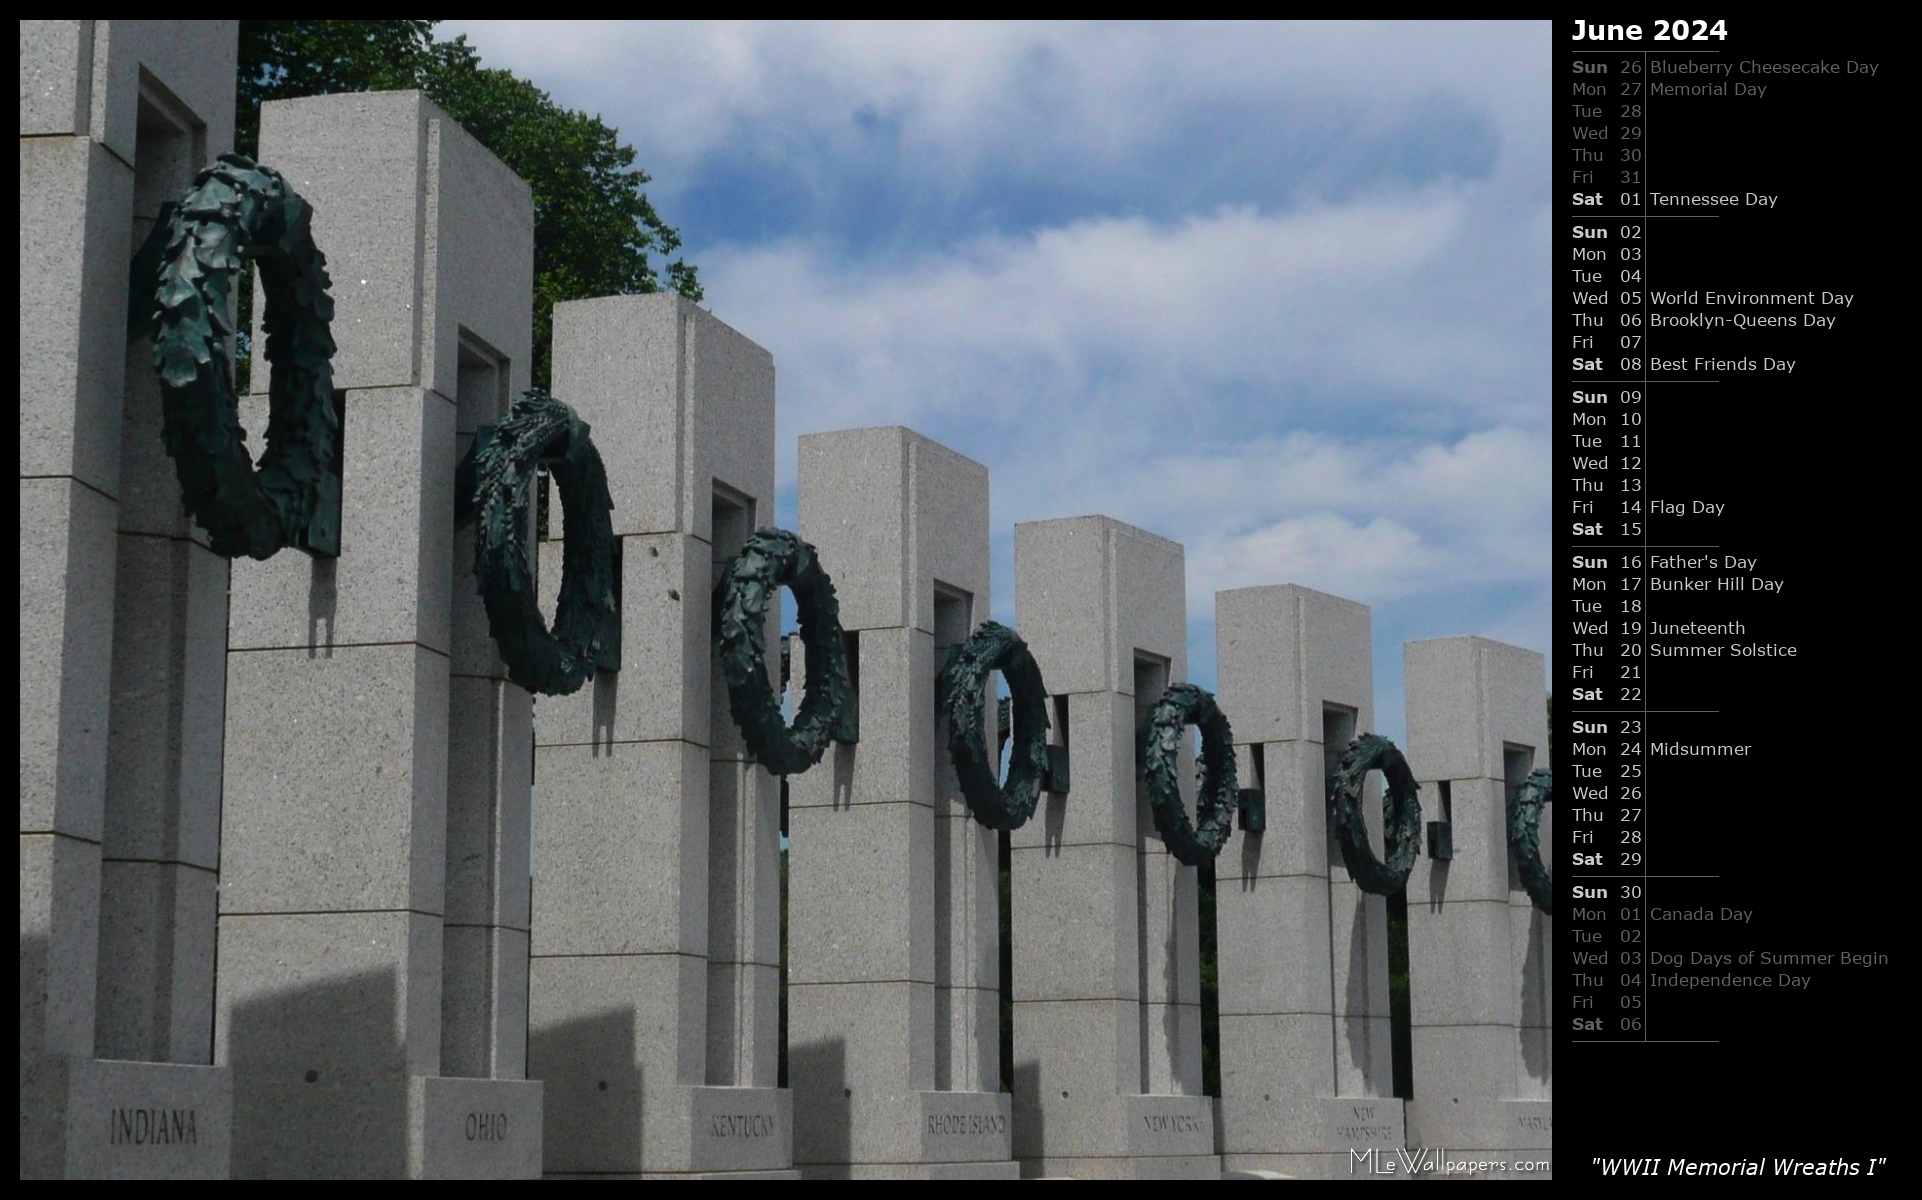 MLeWallpapers.com - WWII Memorial Wreaths I (Calendar)